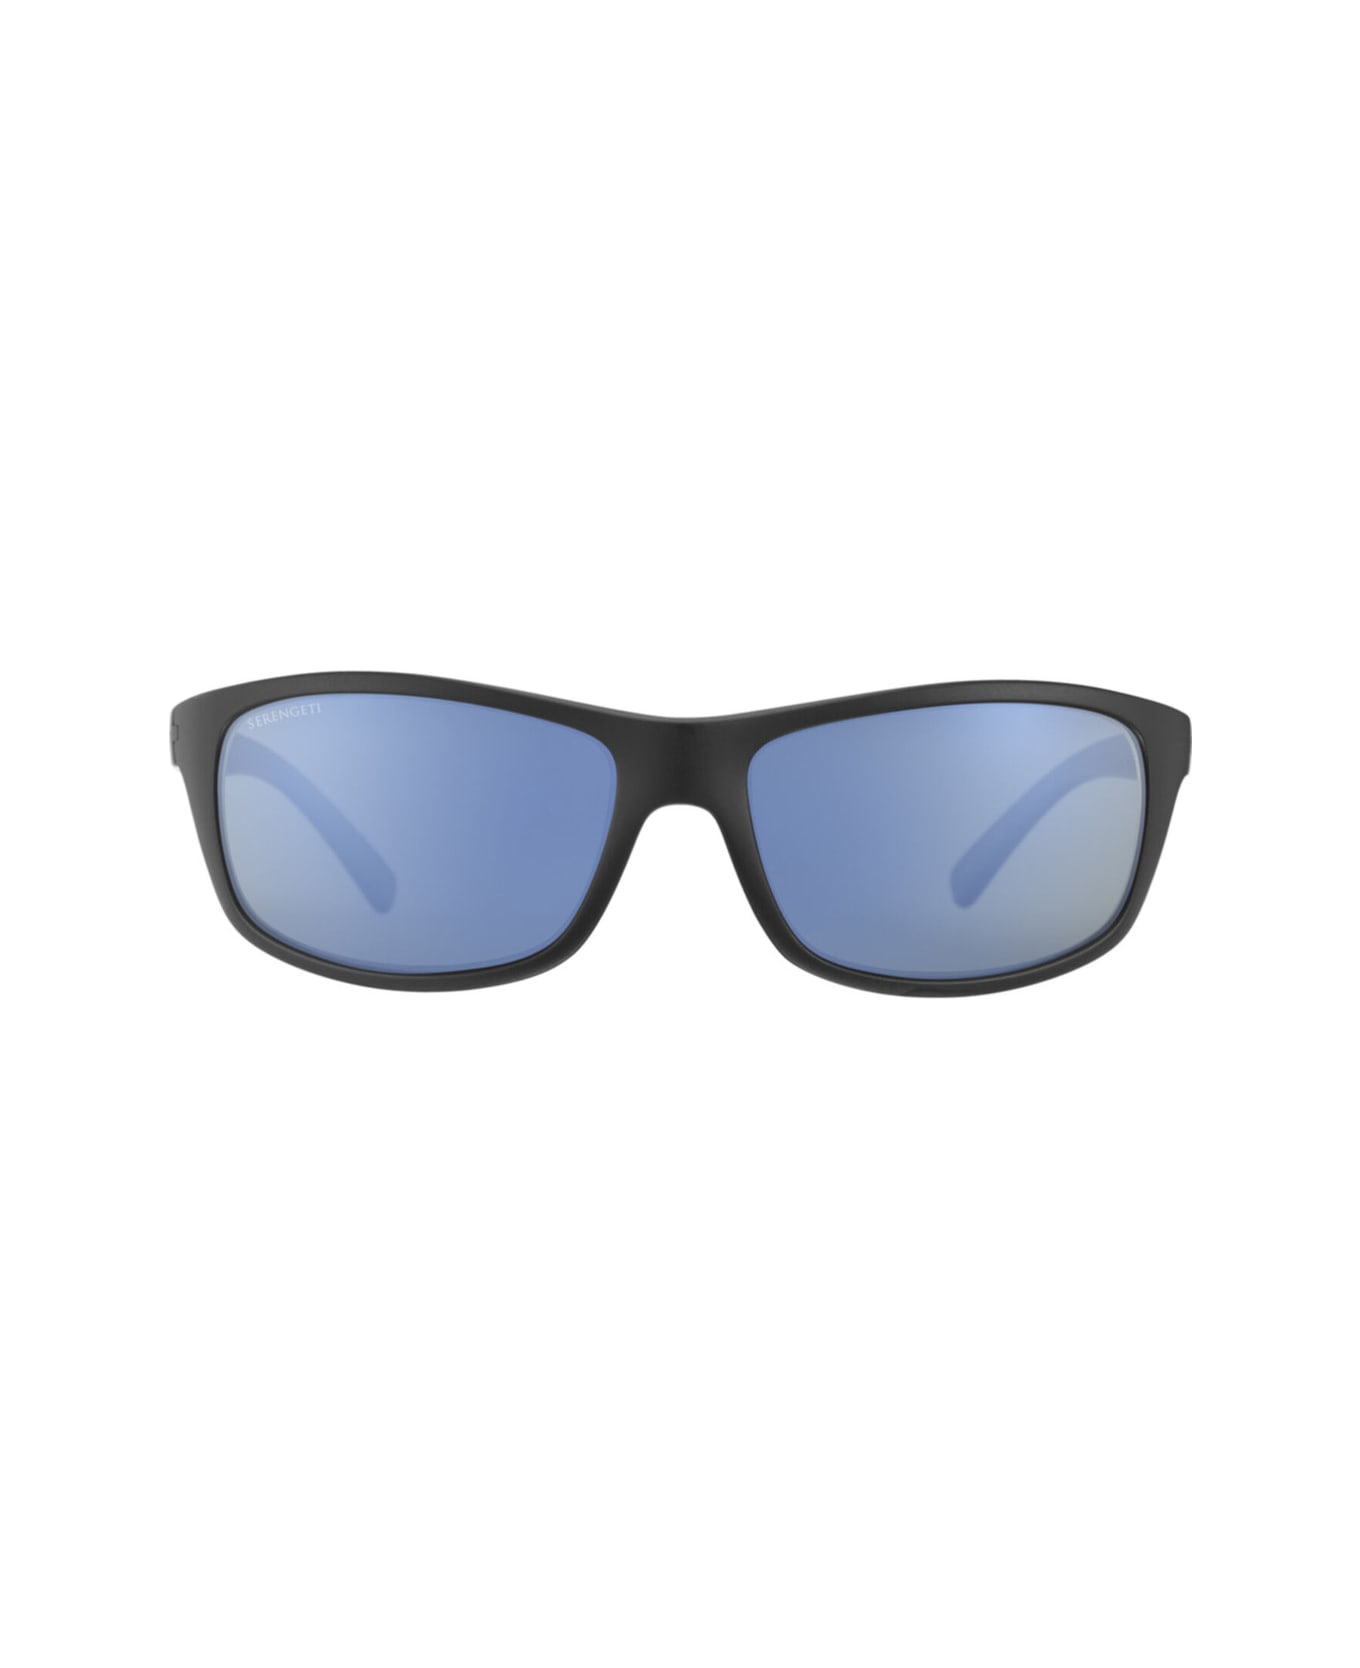 Serengeti Eyewear Bormio 9002 Sunglasses - Matte Black